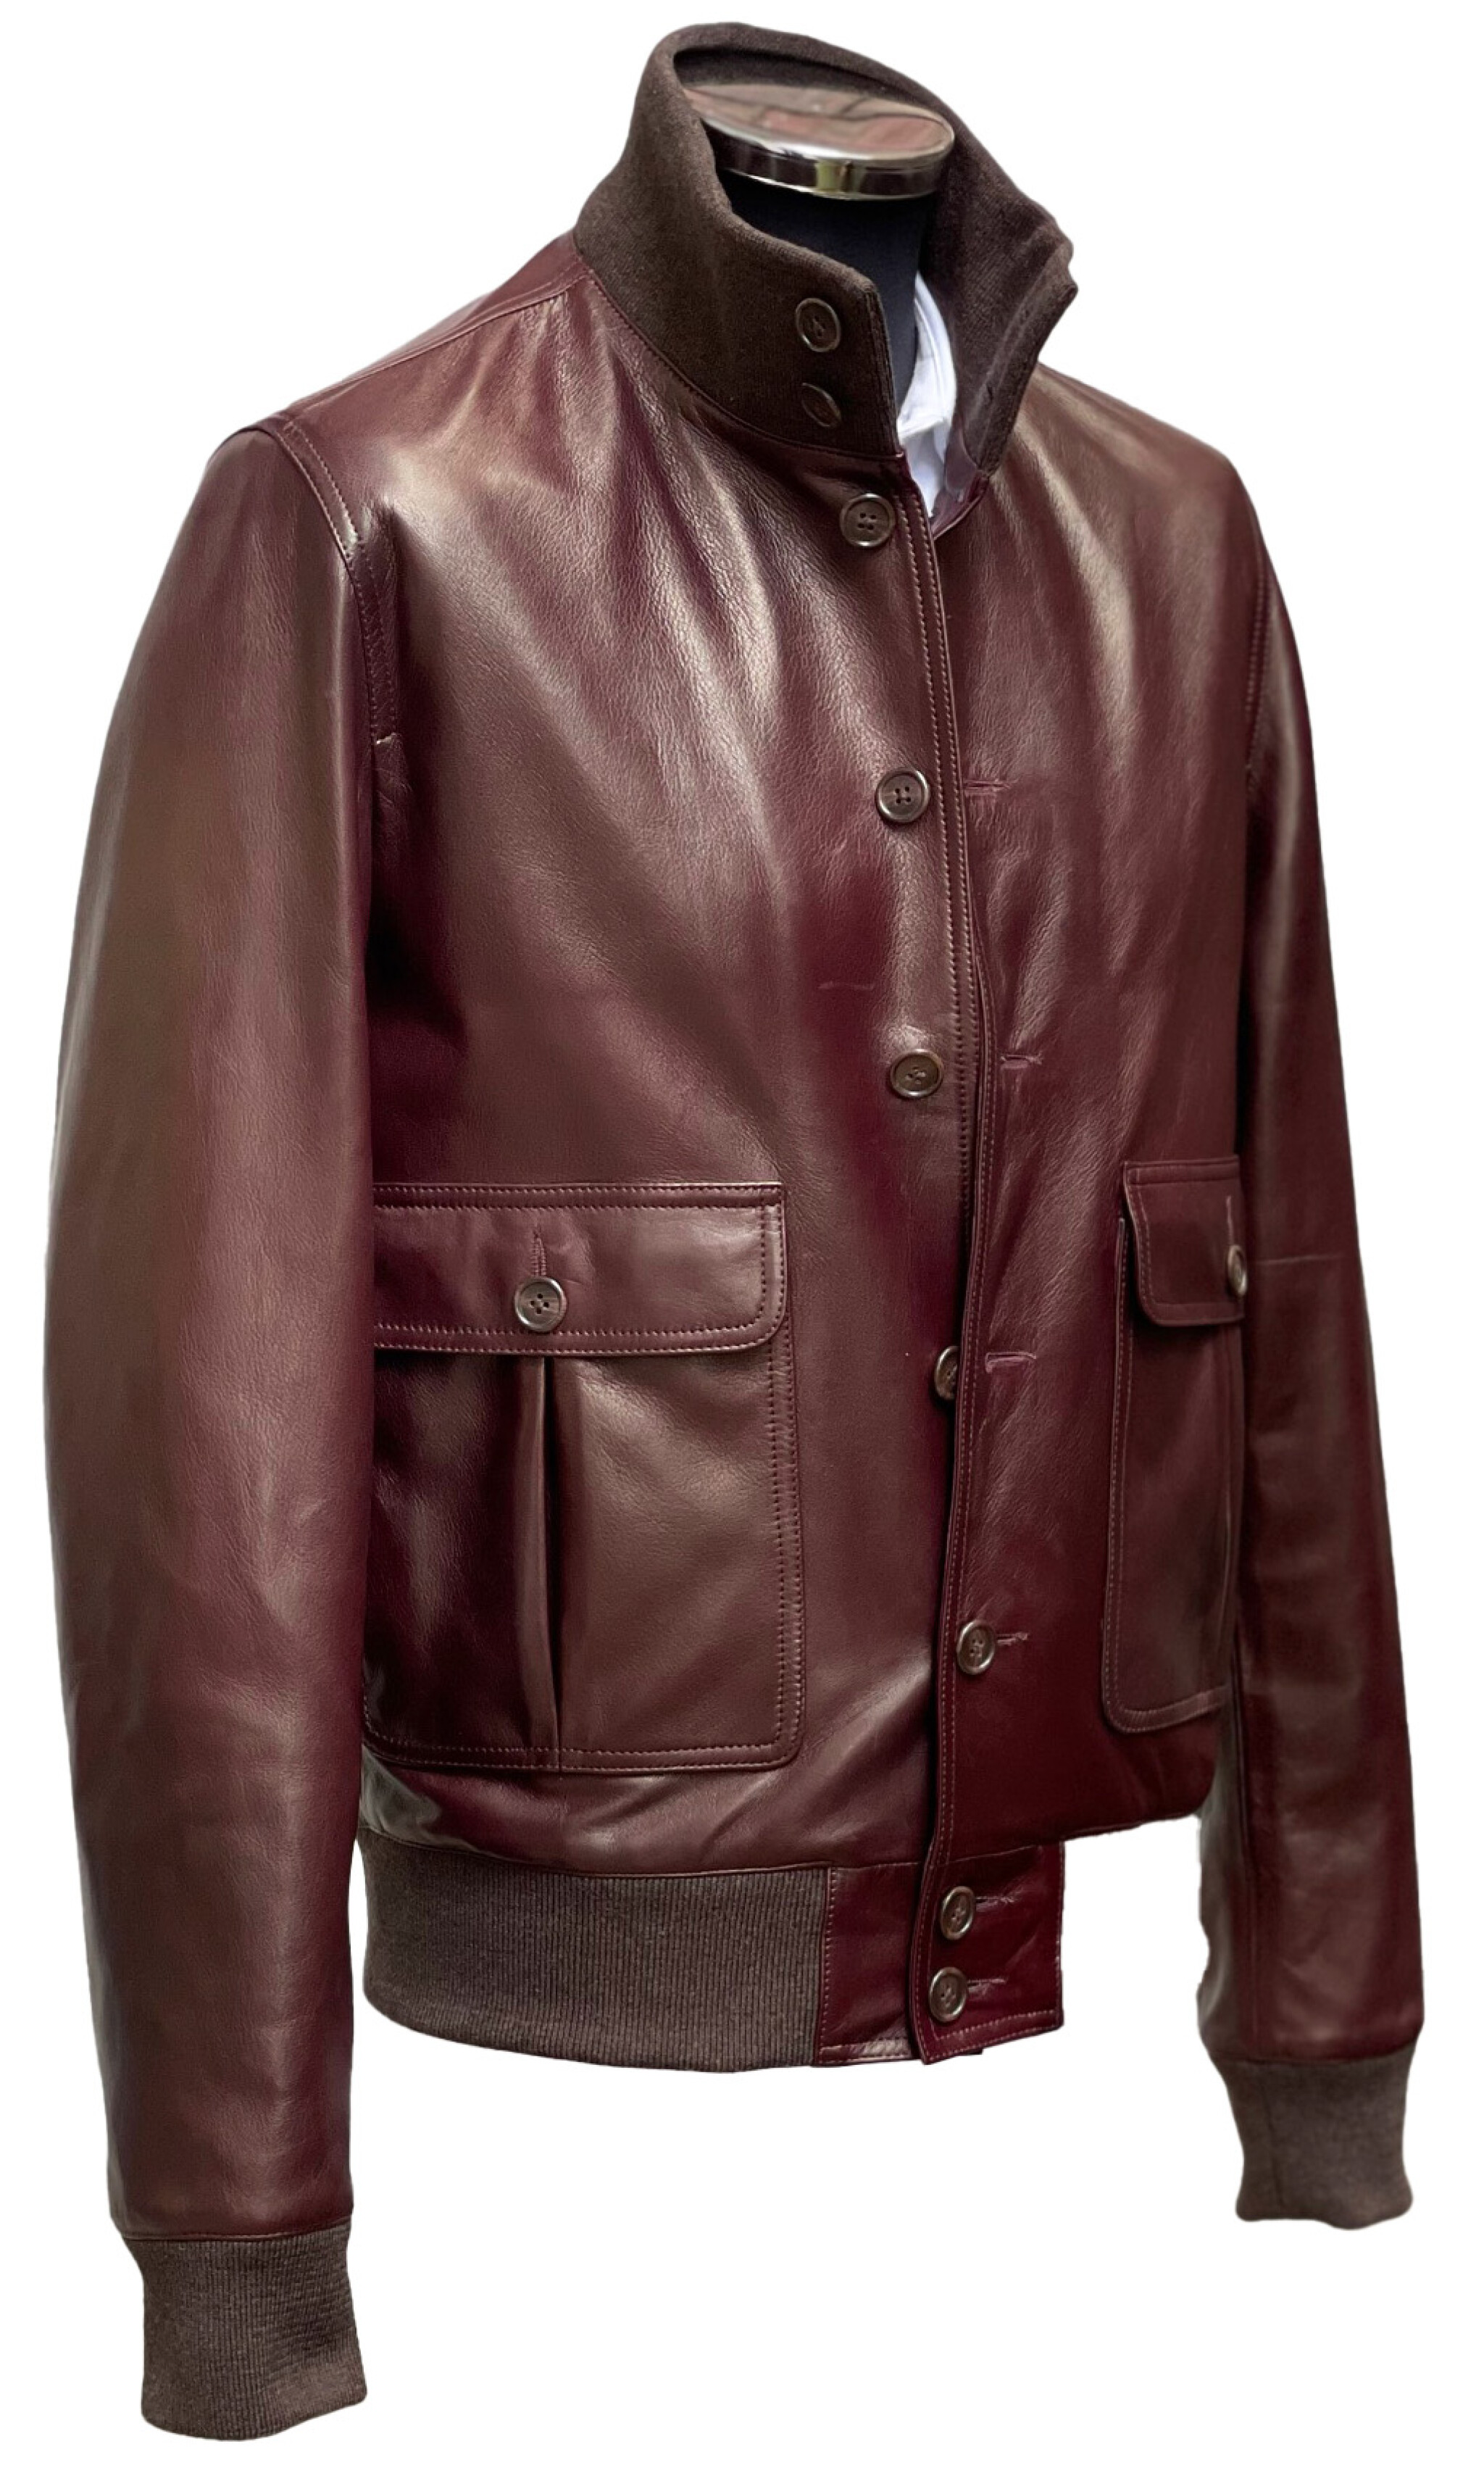 mens-leather-a1-bomber-jacket.jpg